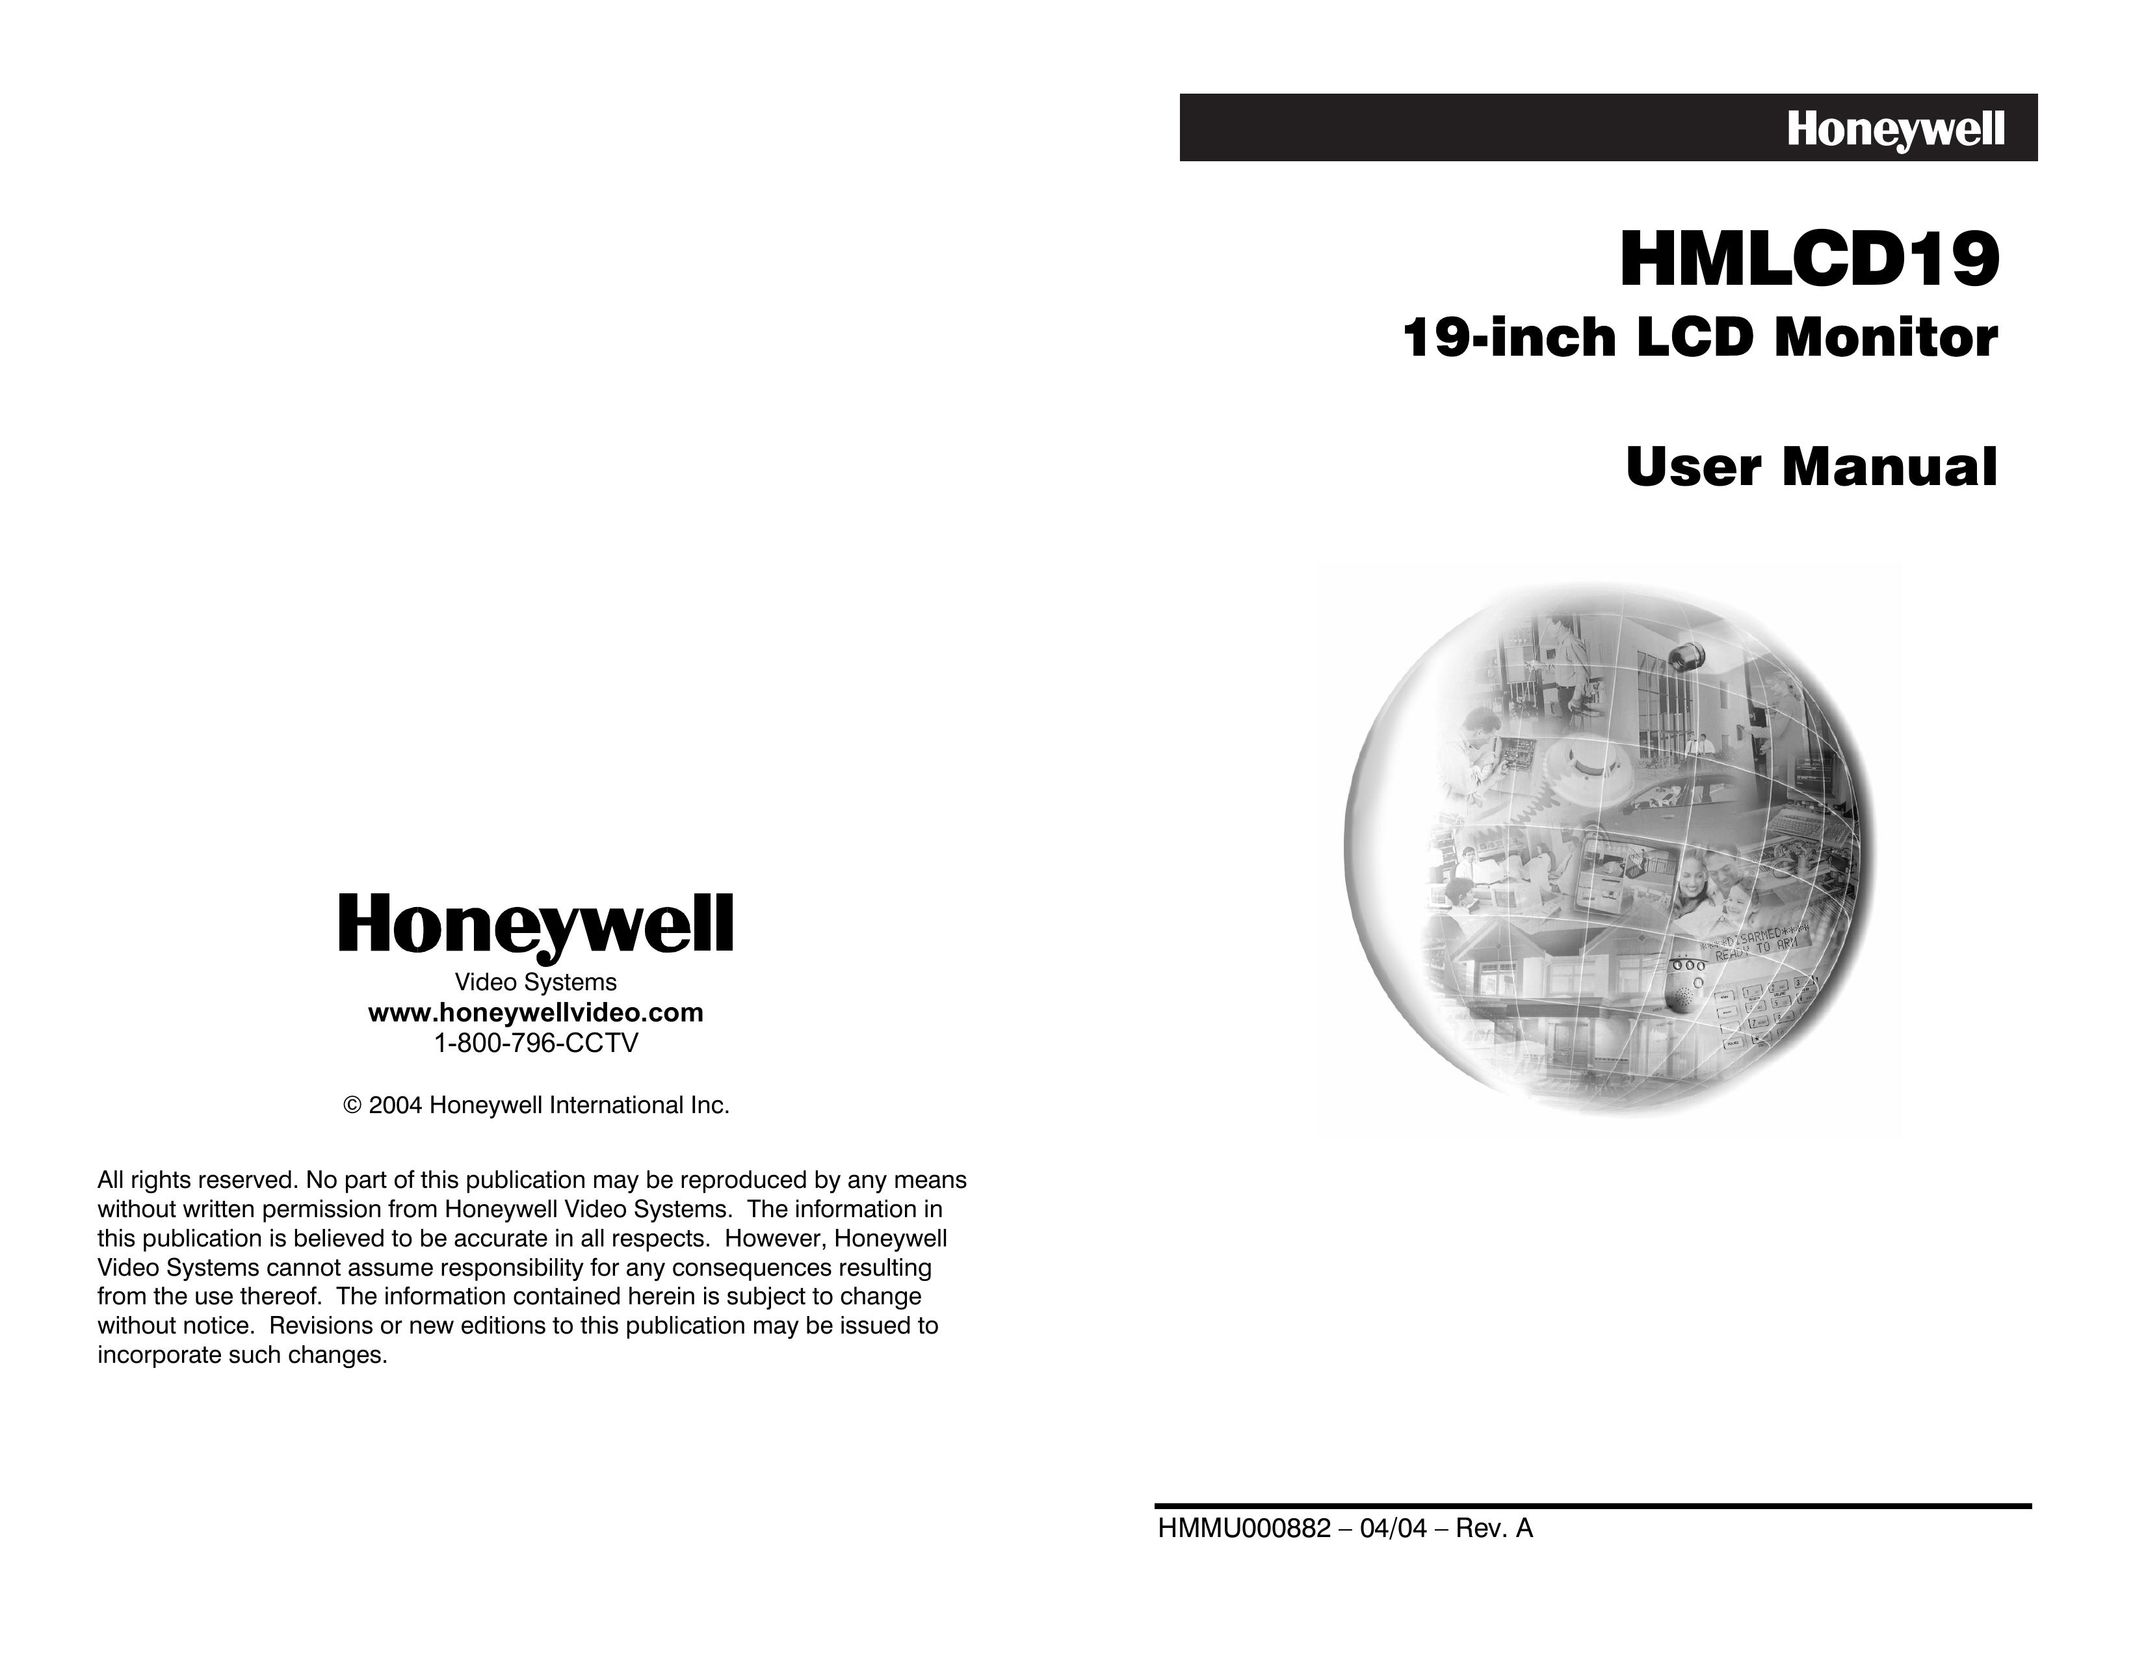 Honeywell HMLCD19 Computer Monitor User Manual